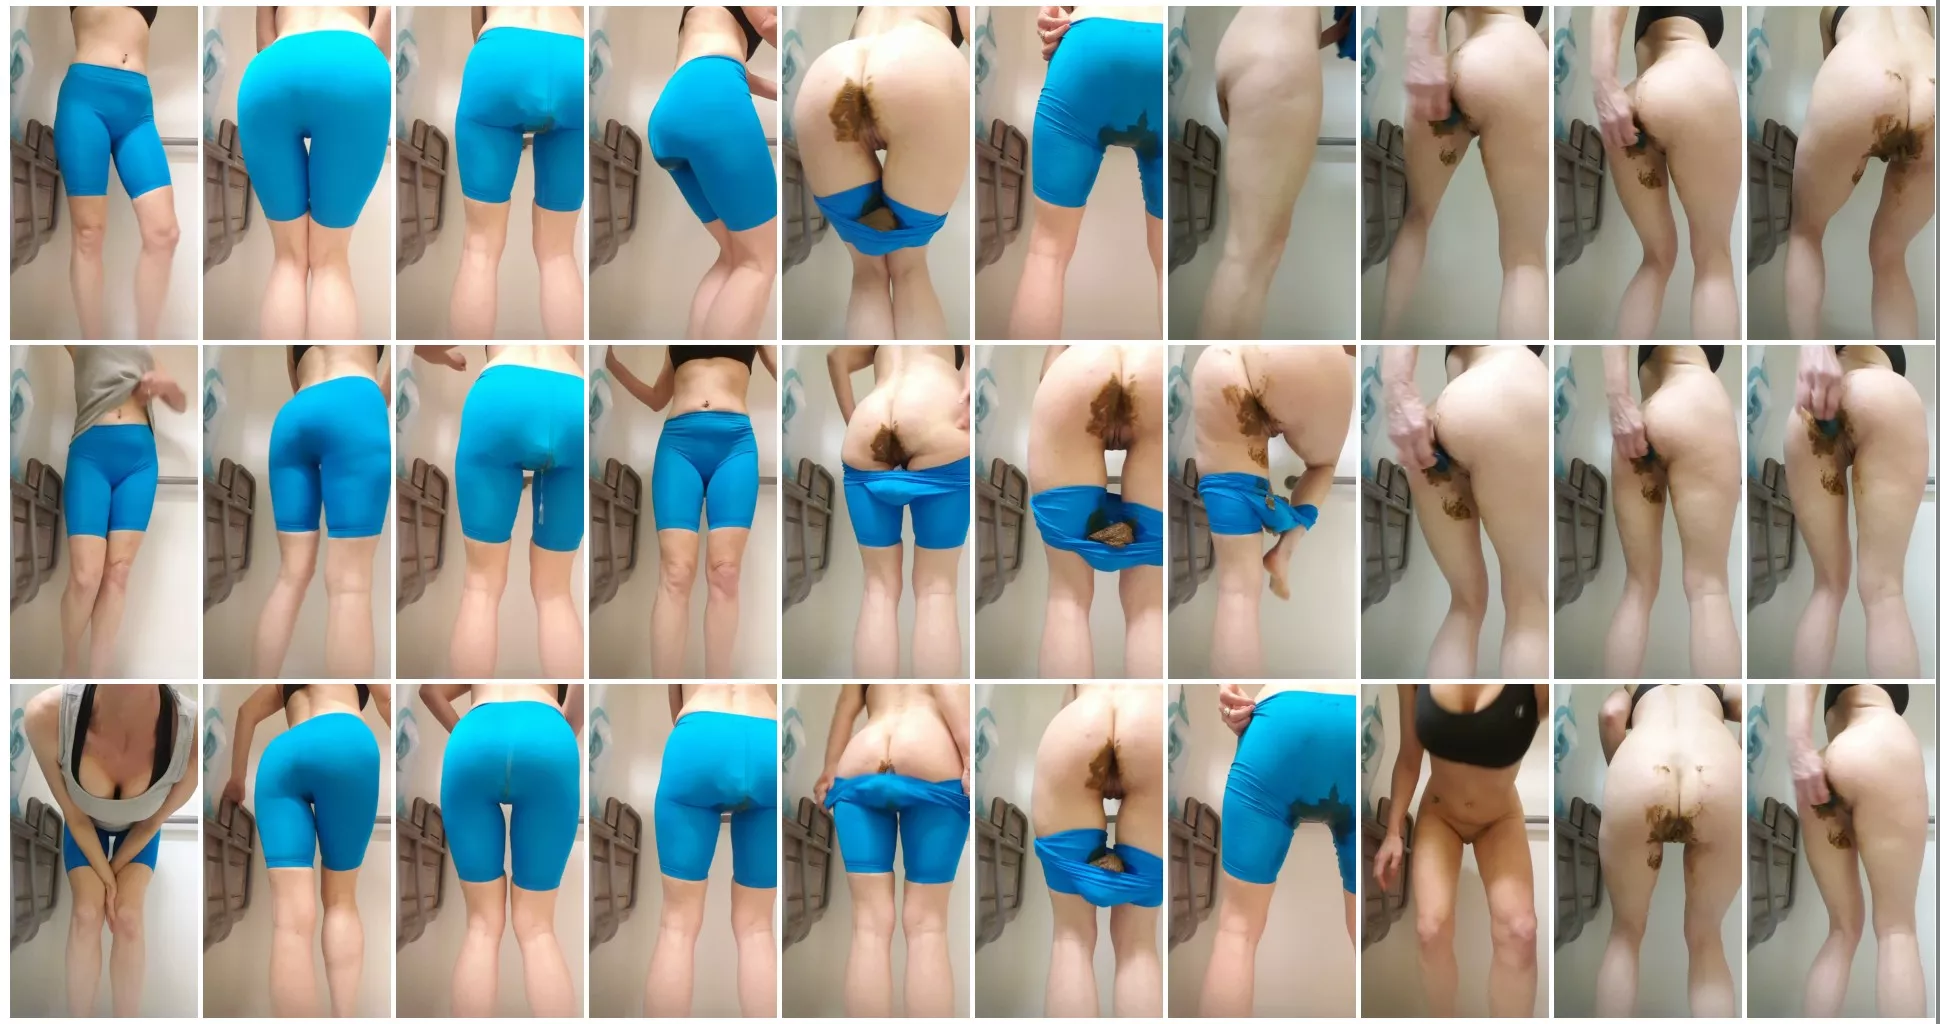 ZARZAR01 - GIANT Yoga Pant Fill, Pee, Butt Plug Play [Scat solo, shit, defecation, Pissing, Big Shit, Dirty Ass, Masturbation,Dirty  shorts,Dildo masturbation,Smearing]